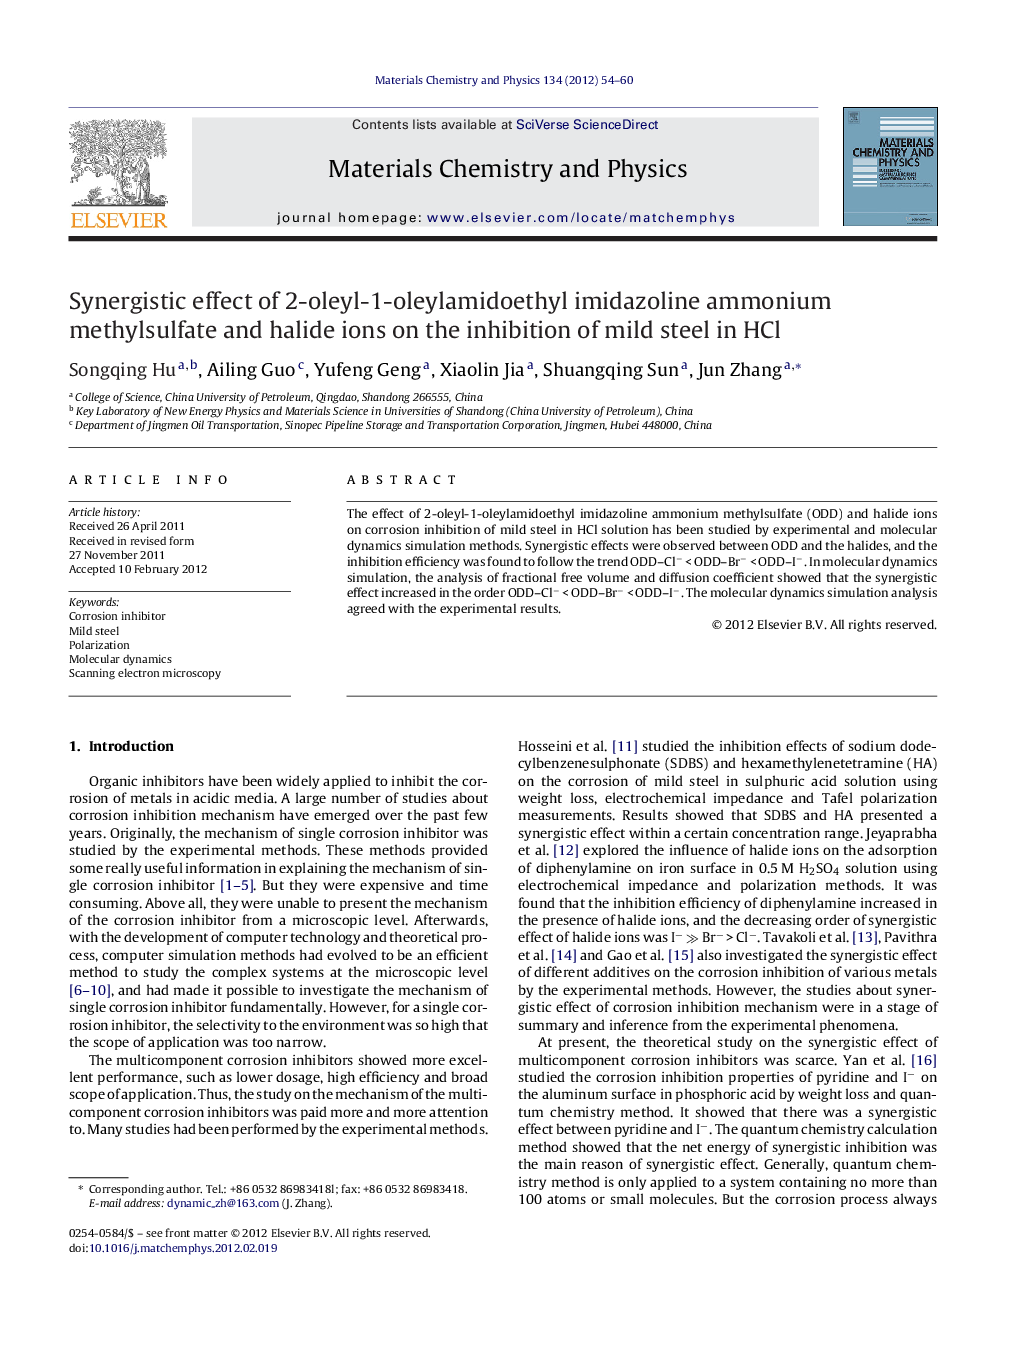 Synergistic effect of 2-oleyl-1-oleylamidoethyl imidazoline ammonium methylsulfate and halide ions on the inhibition of mild steel in HCl